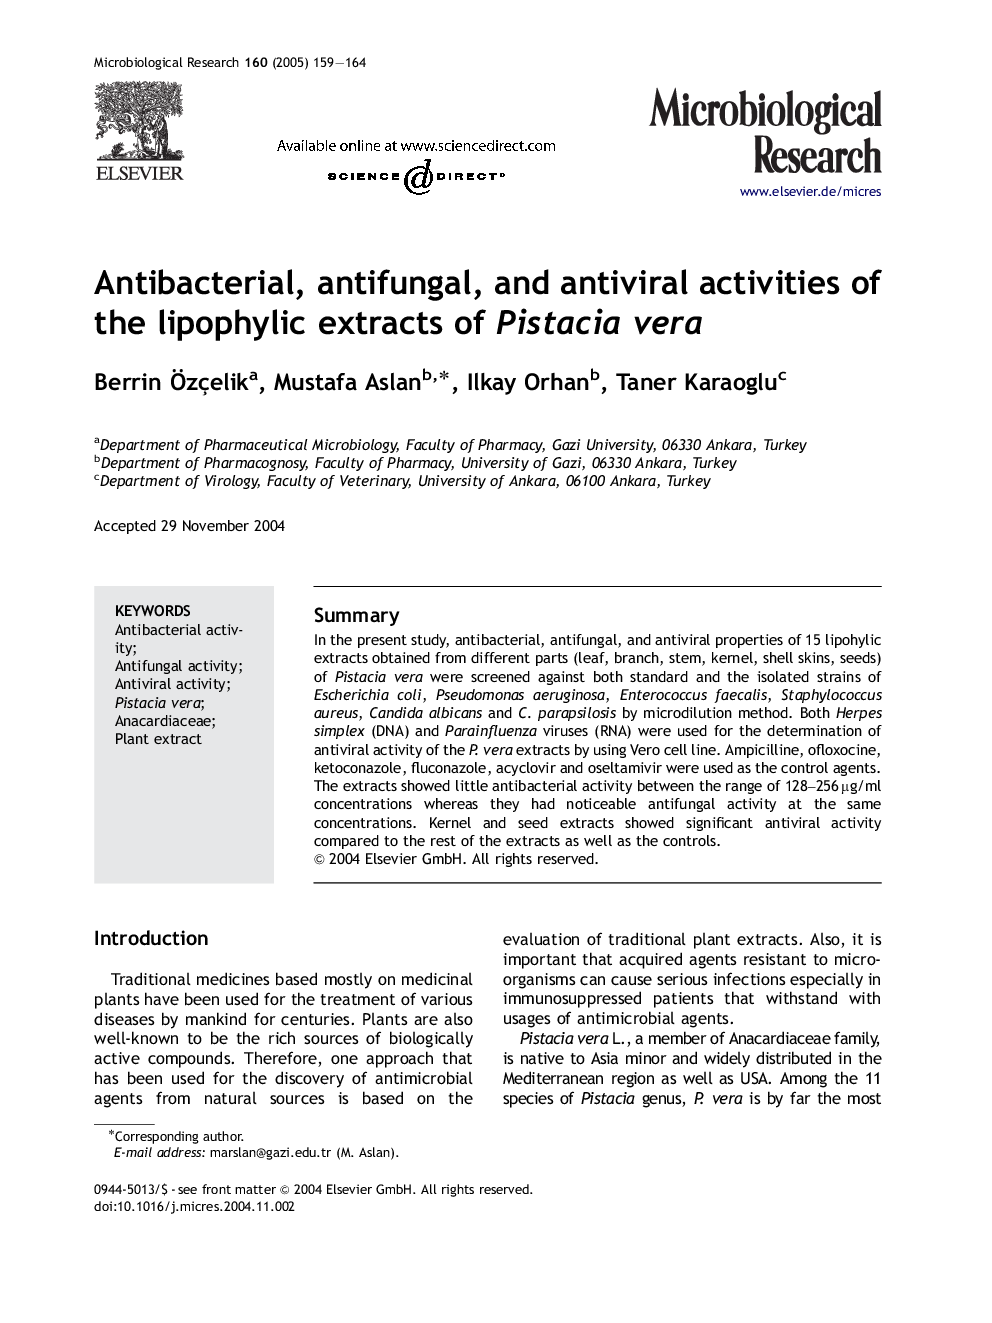 Antibacterial, antifungal, and antiviral activities of the lipophylic extracts of Pistacia vera